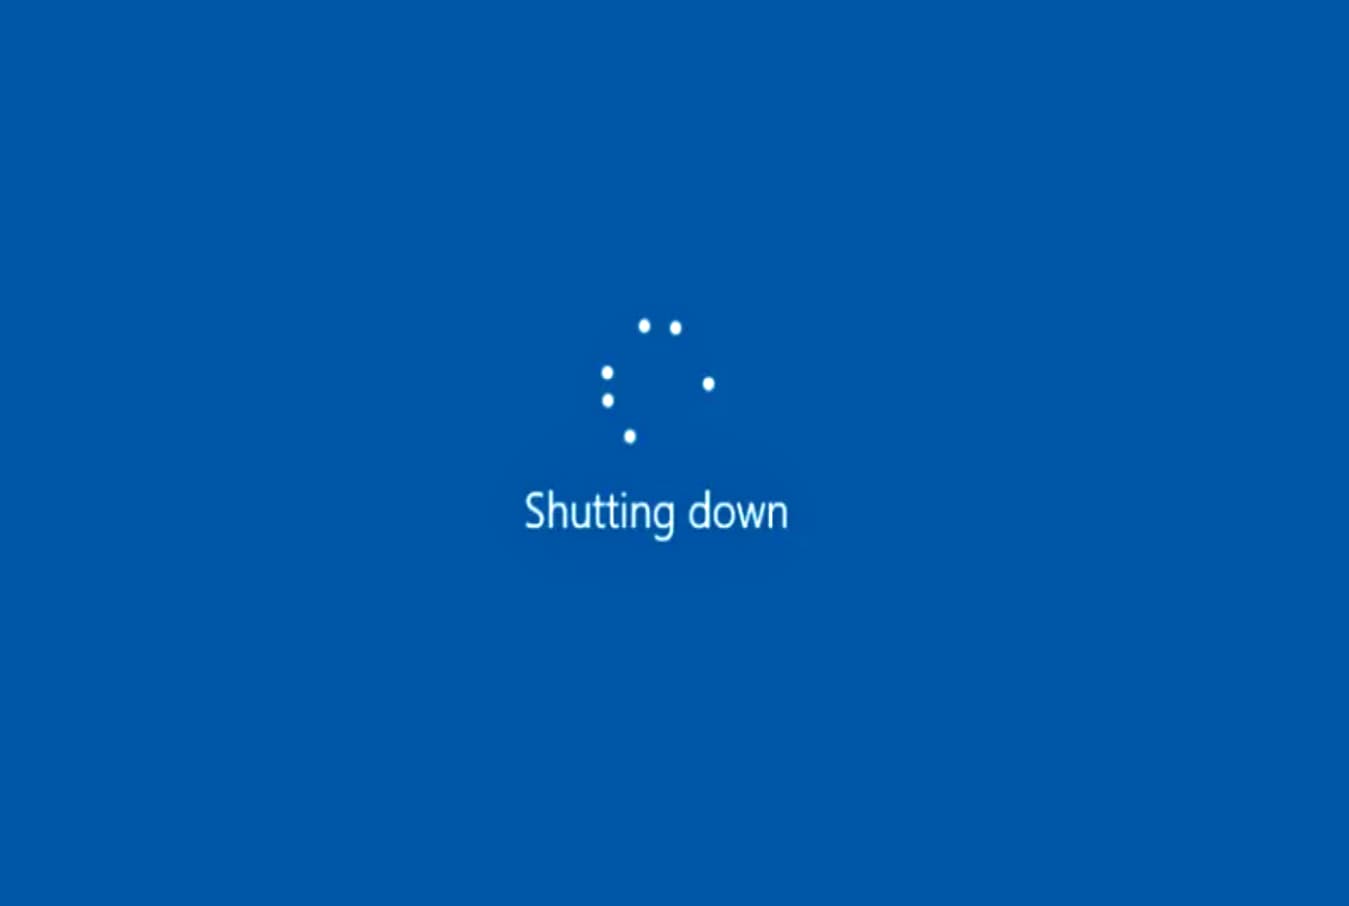 New Windows 10 bug causes PC to take longer to shut down